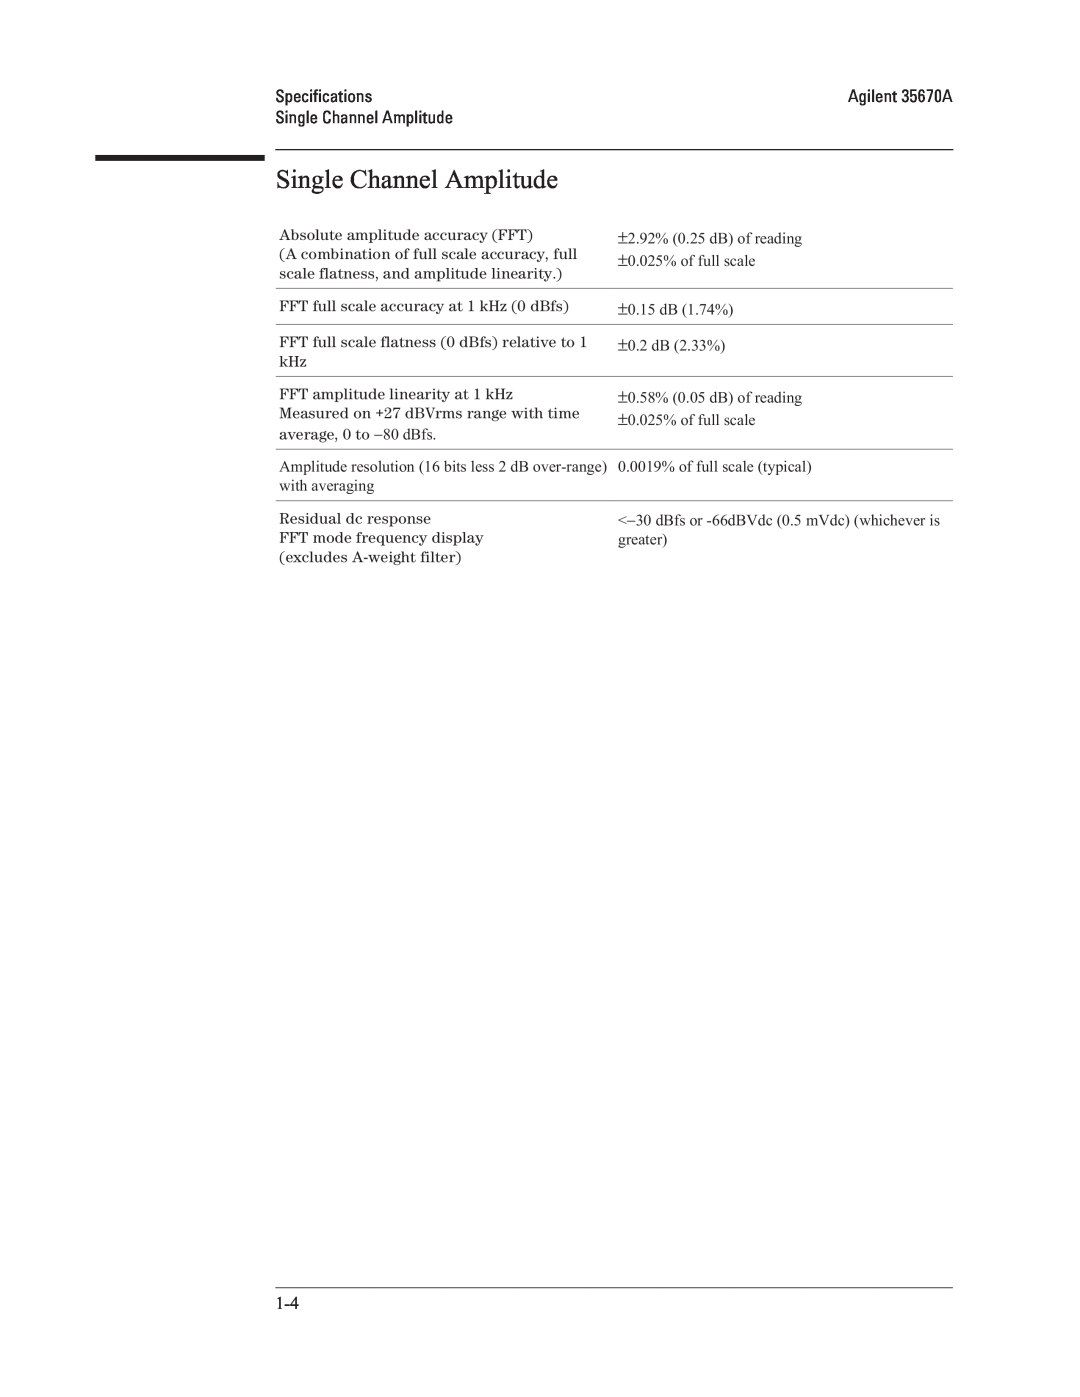 Agilent Technologies 35670-90066 manual Single Channel Amplitude, Specifications 